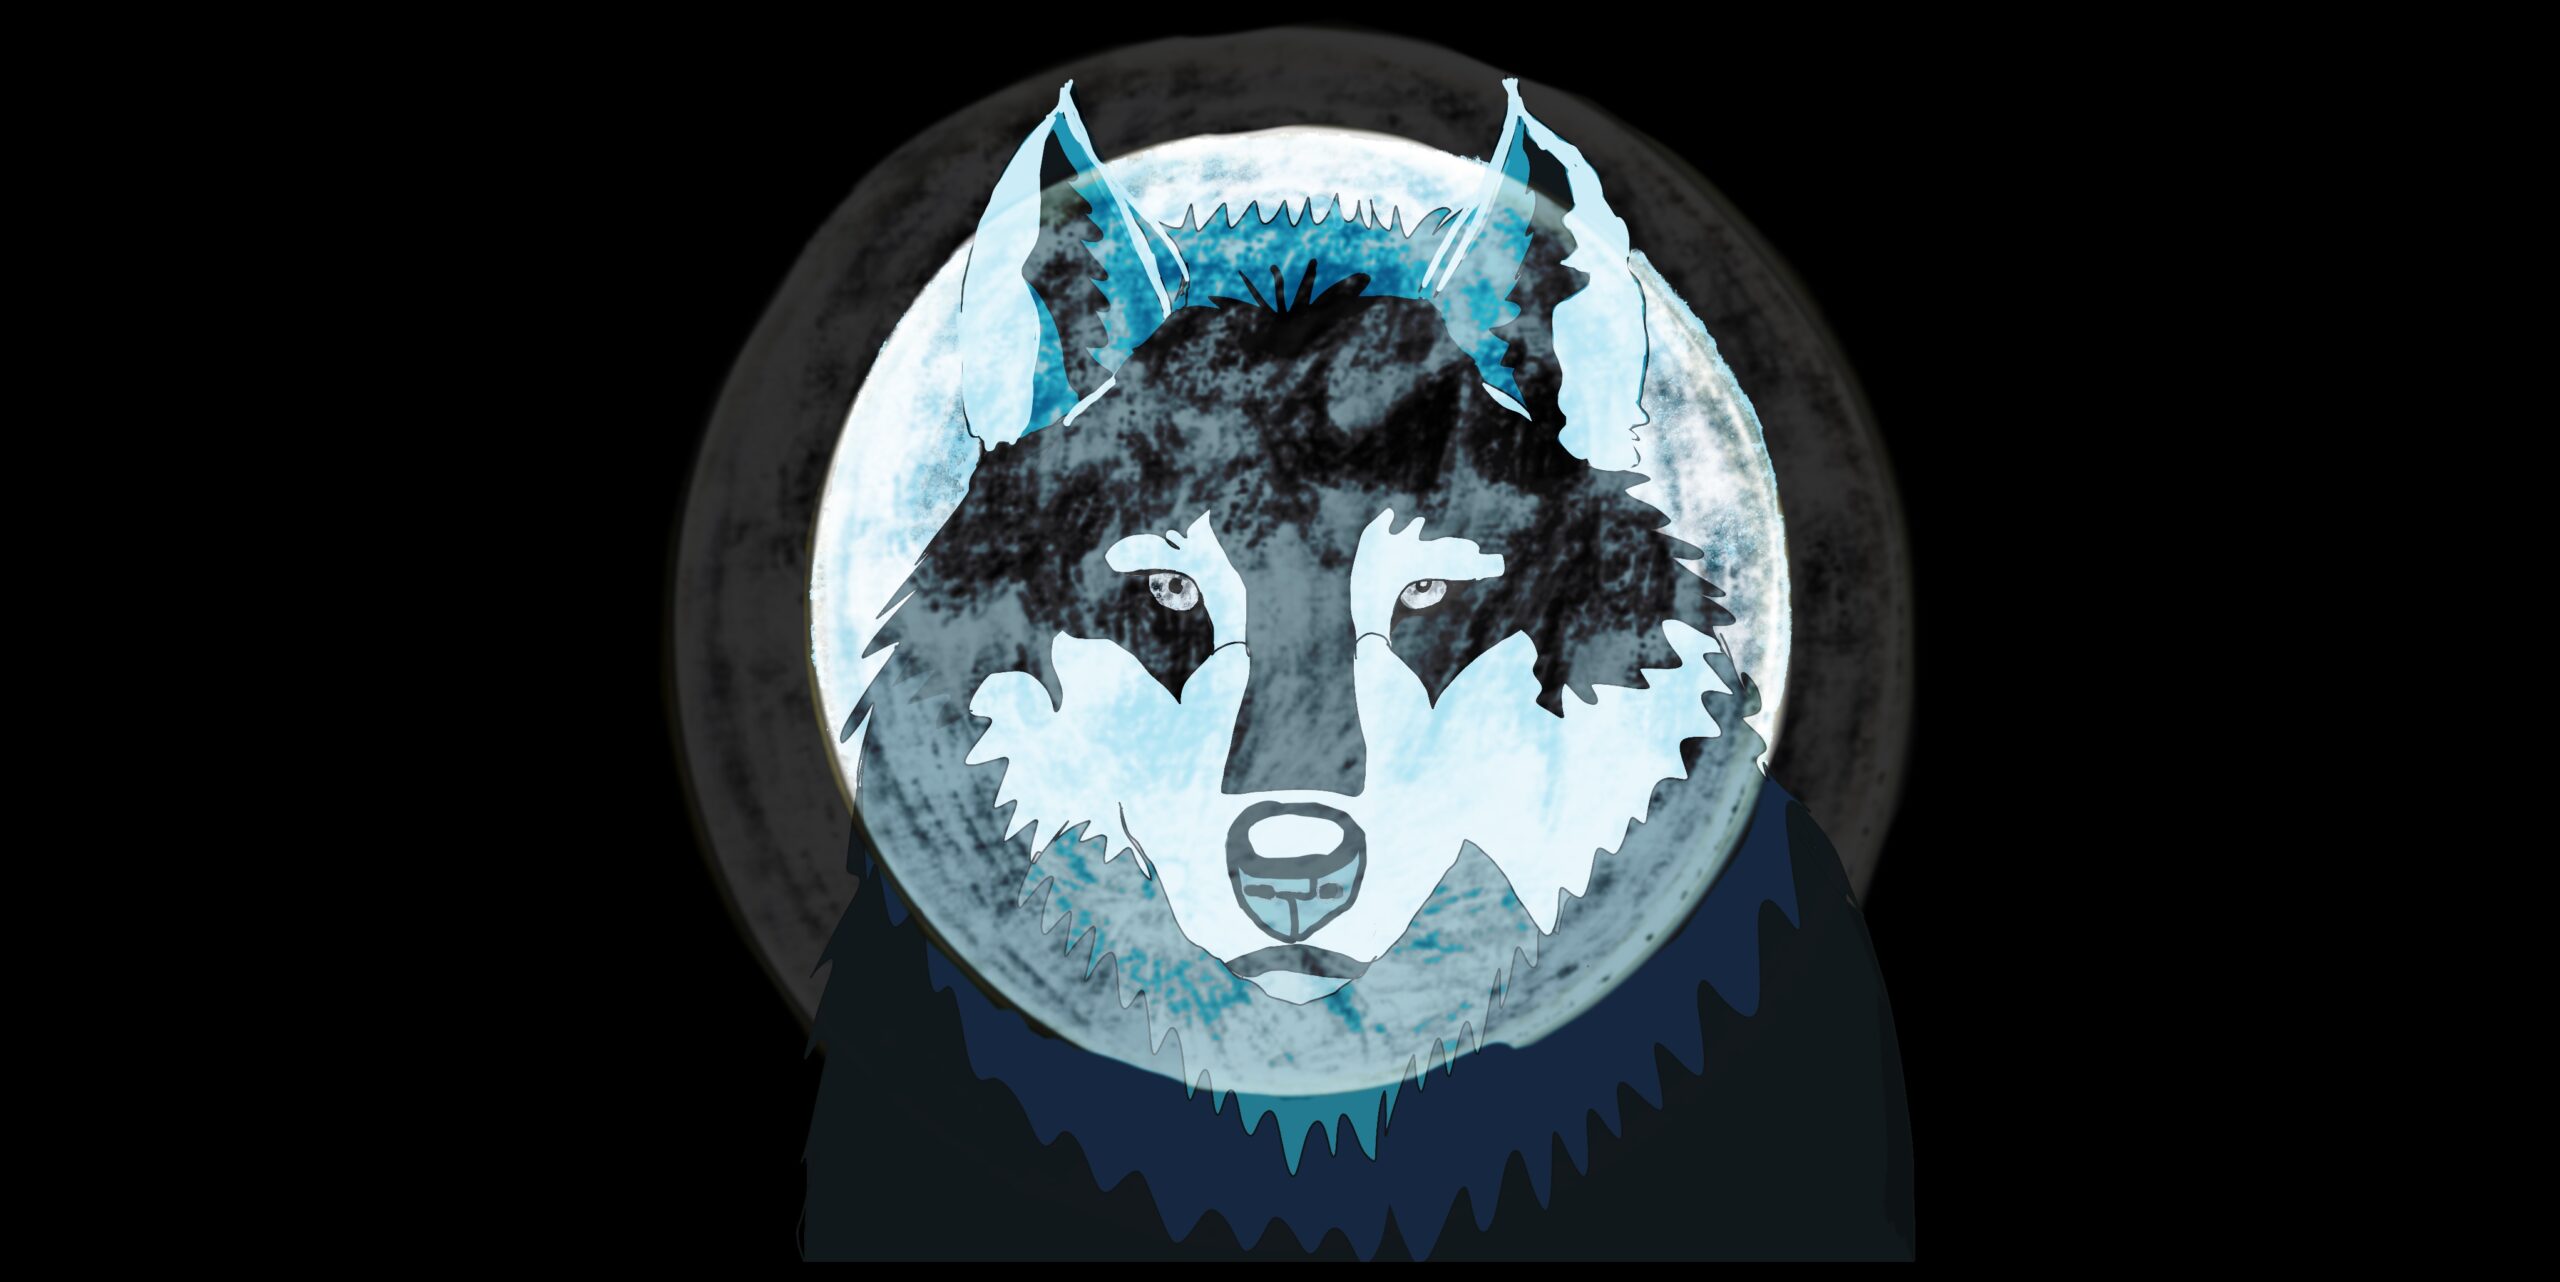 Volle maan ritueel januari: Wolfmaan